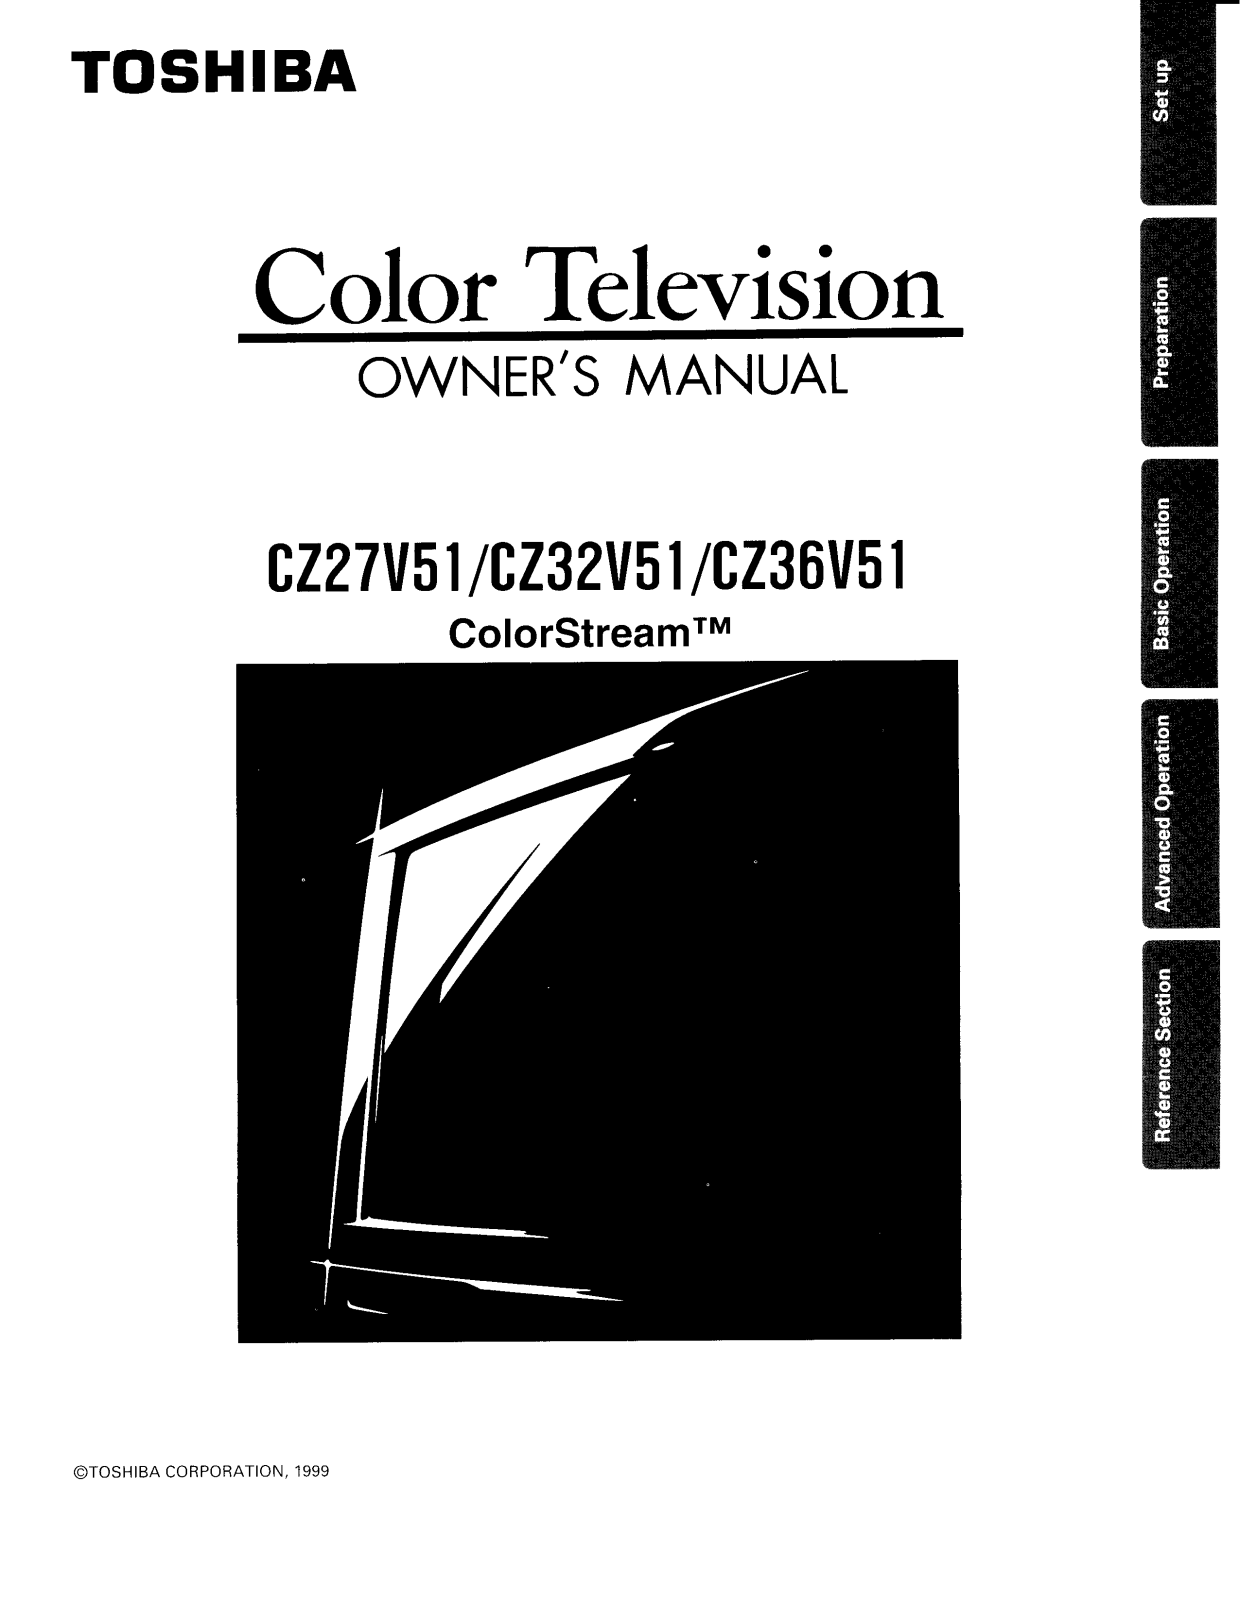 Toshiba CZ27V51, CZ32V51, CZ36V51 Manual